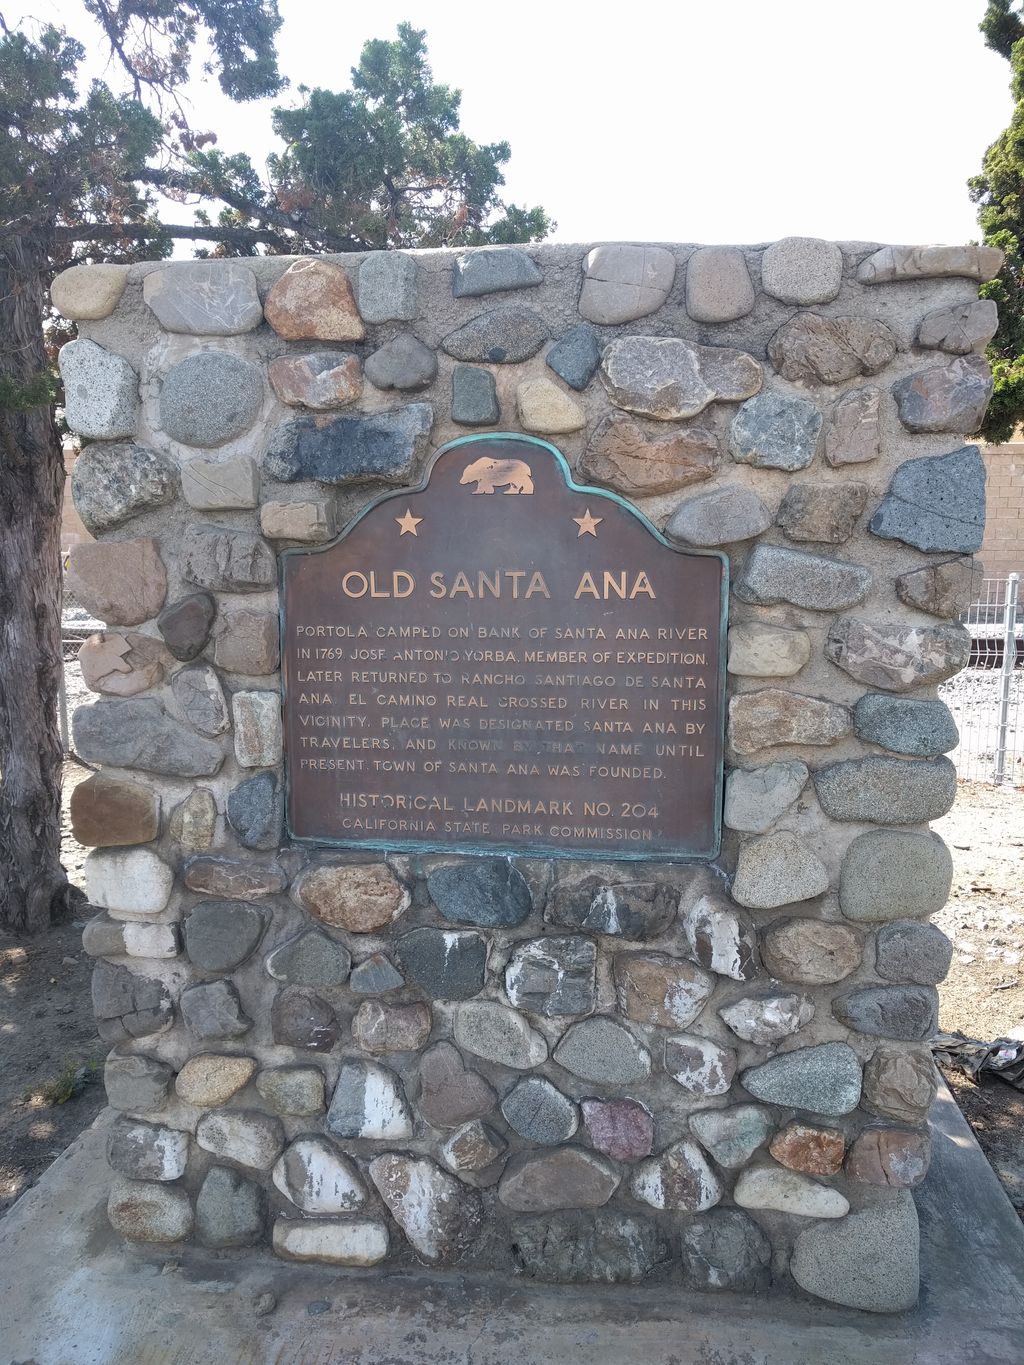 Old Santa Ana Historical Marker